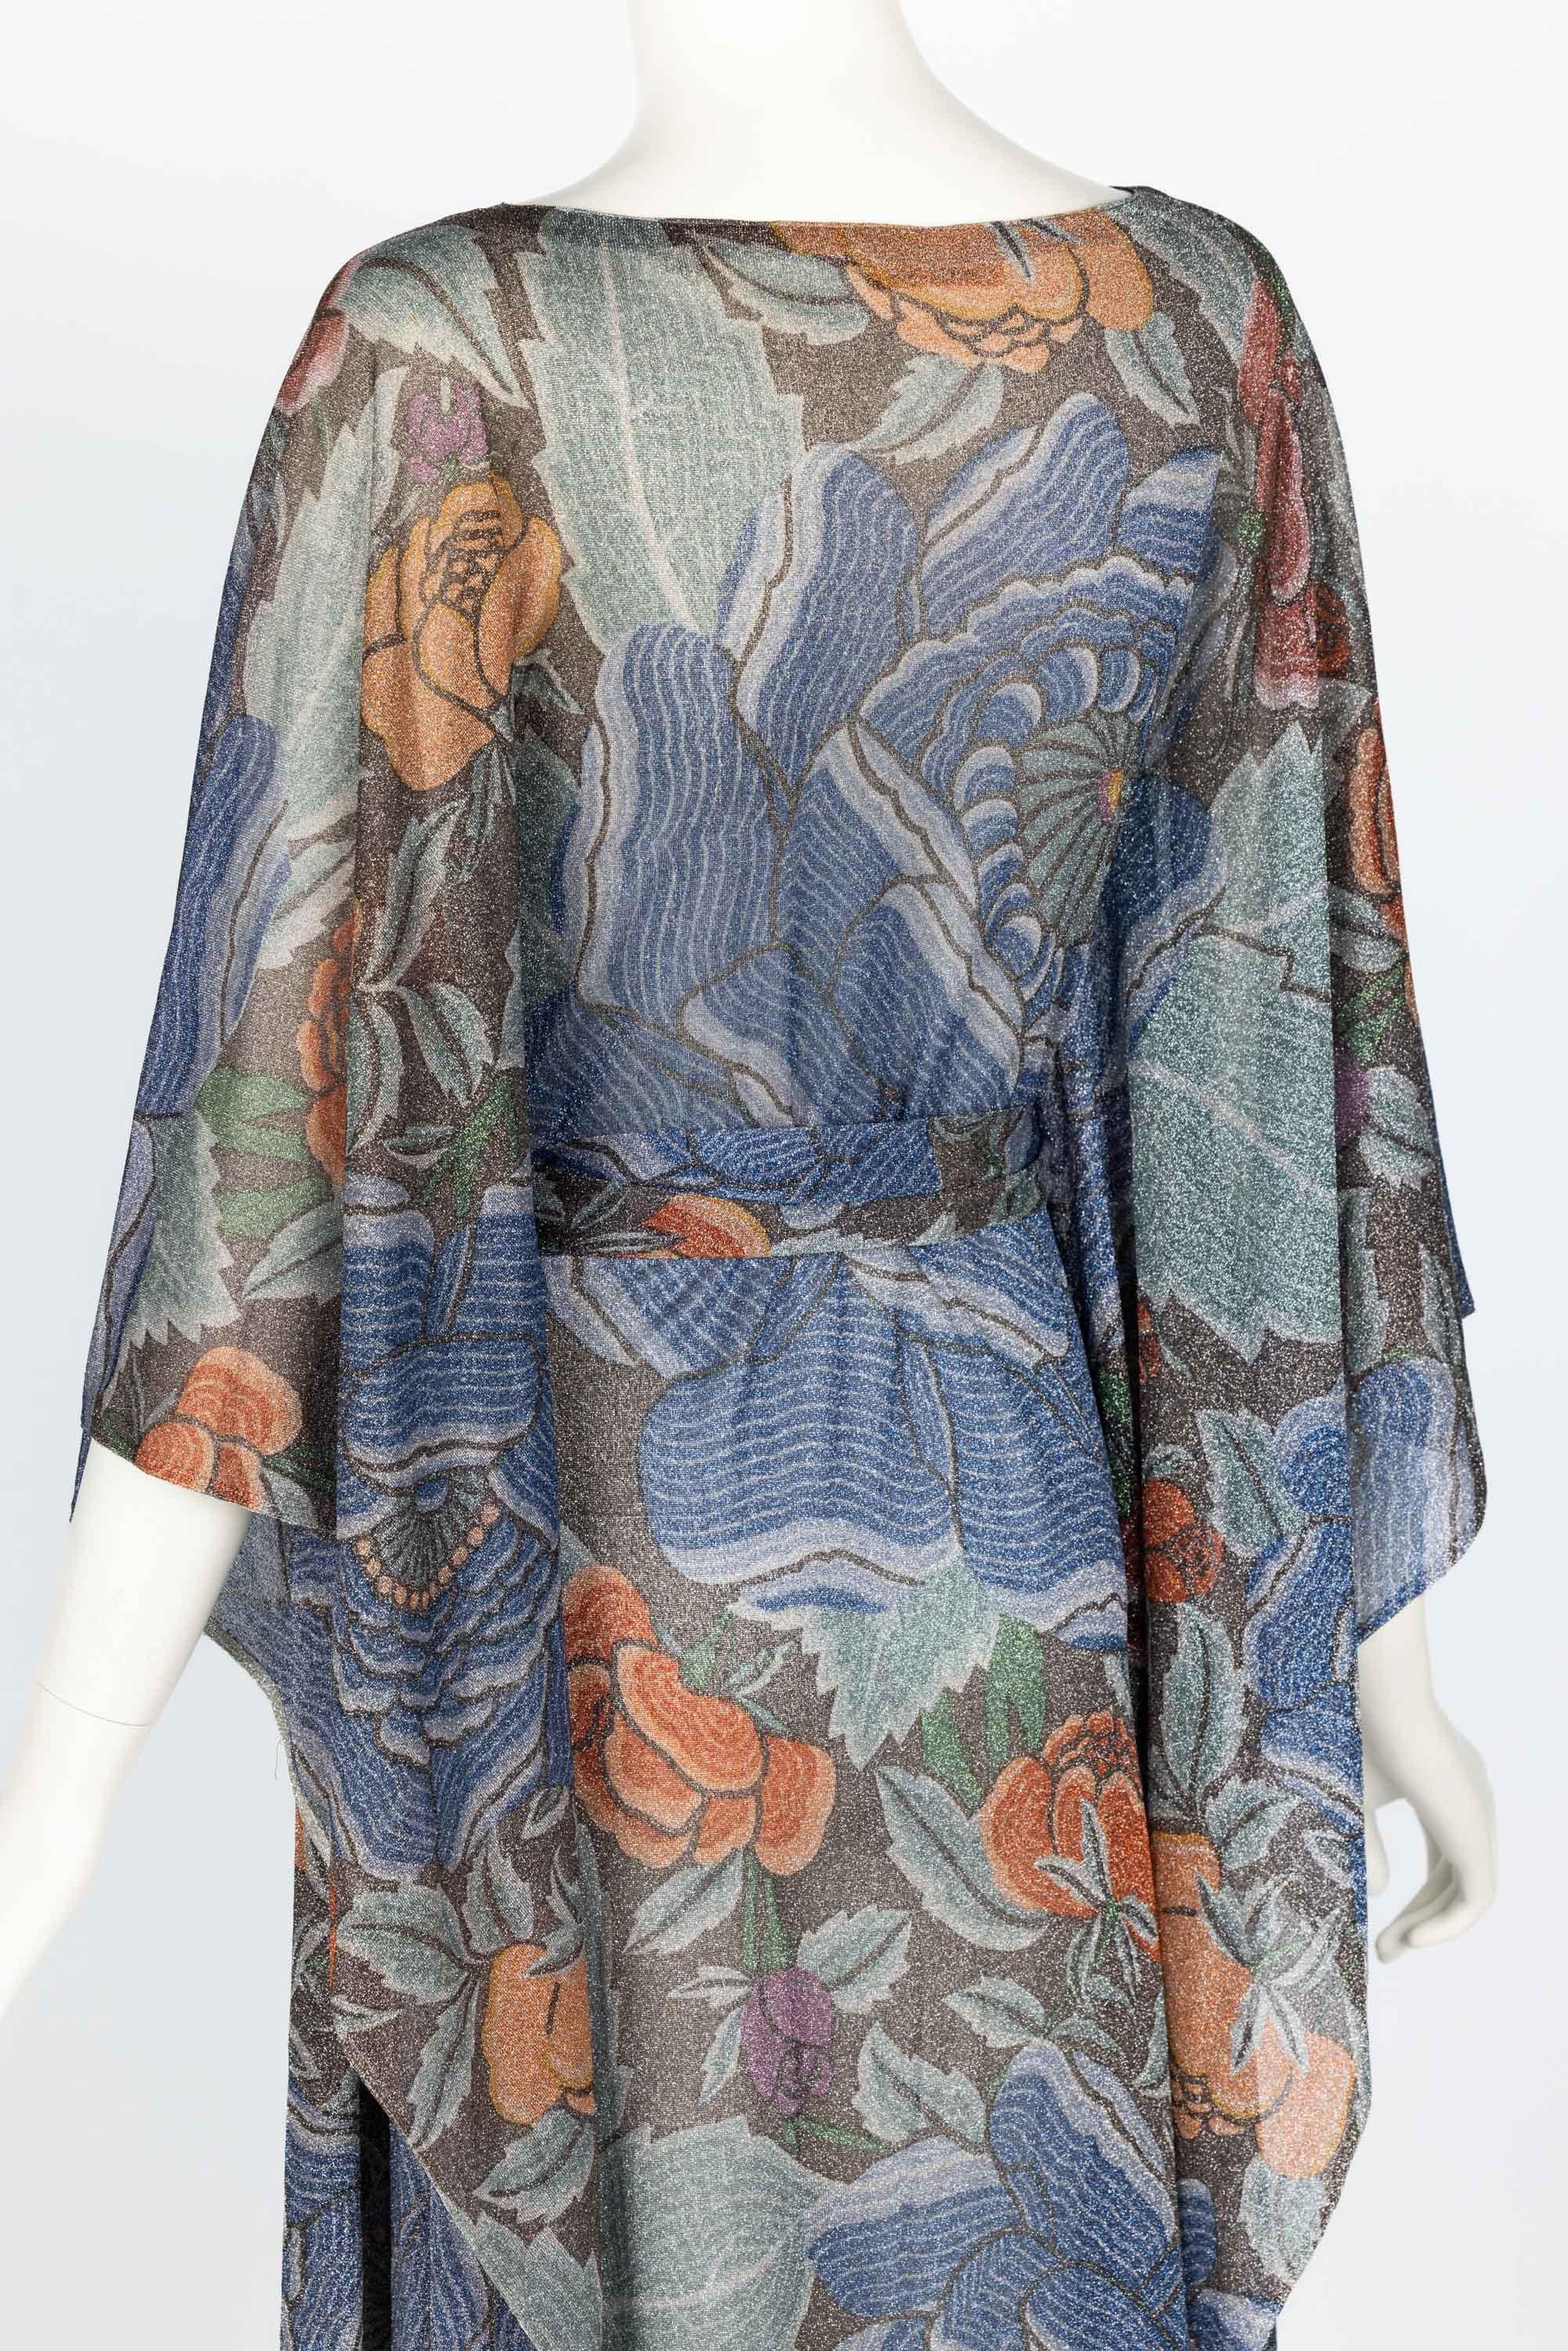 Iconic Missoni 1970s Floral Print Metallic Lurex Caftan Dress  For Sale 6